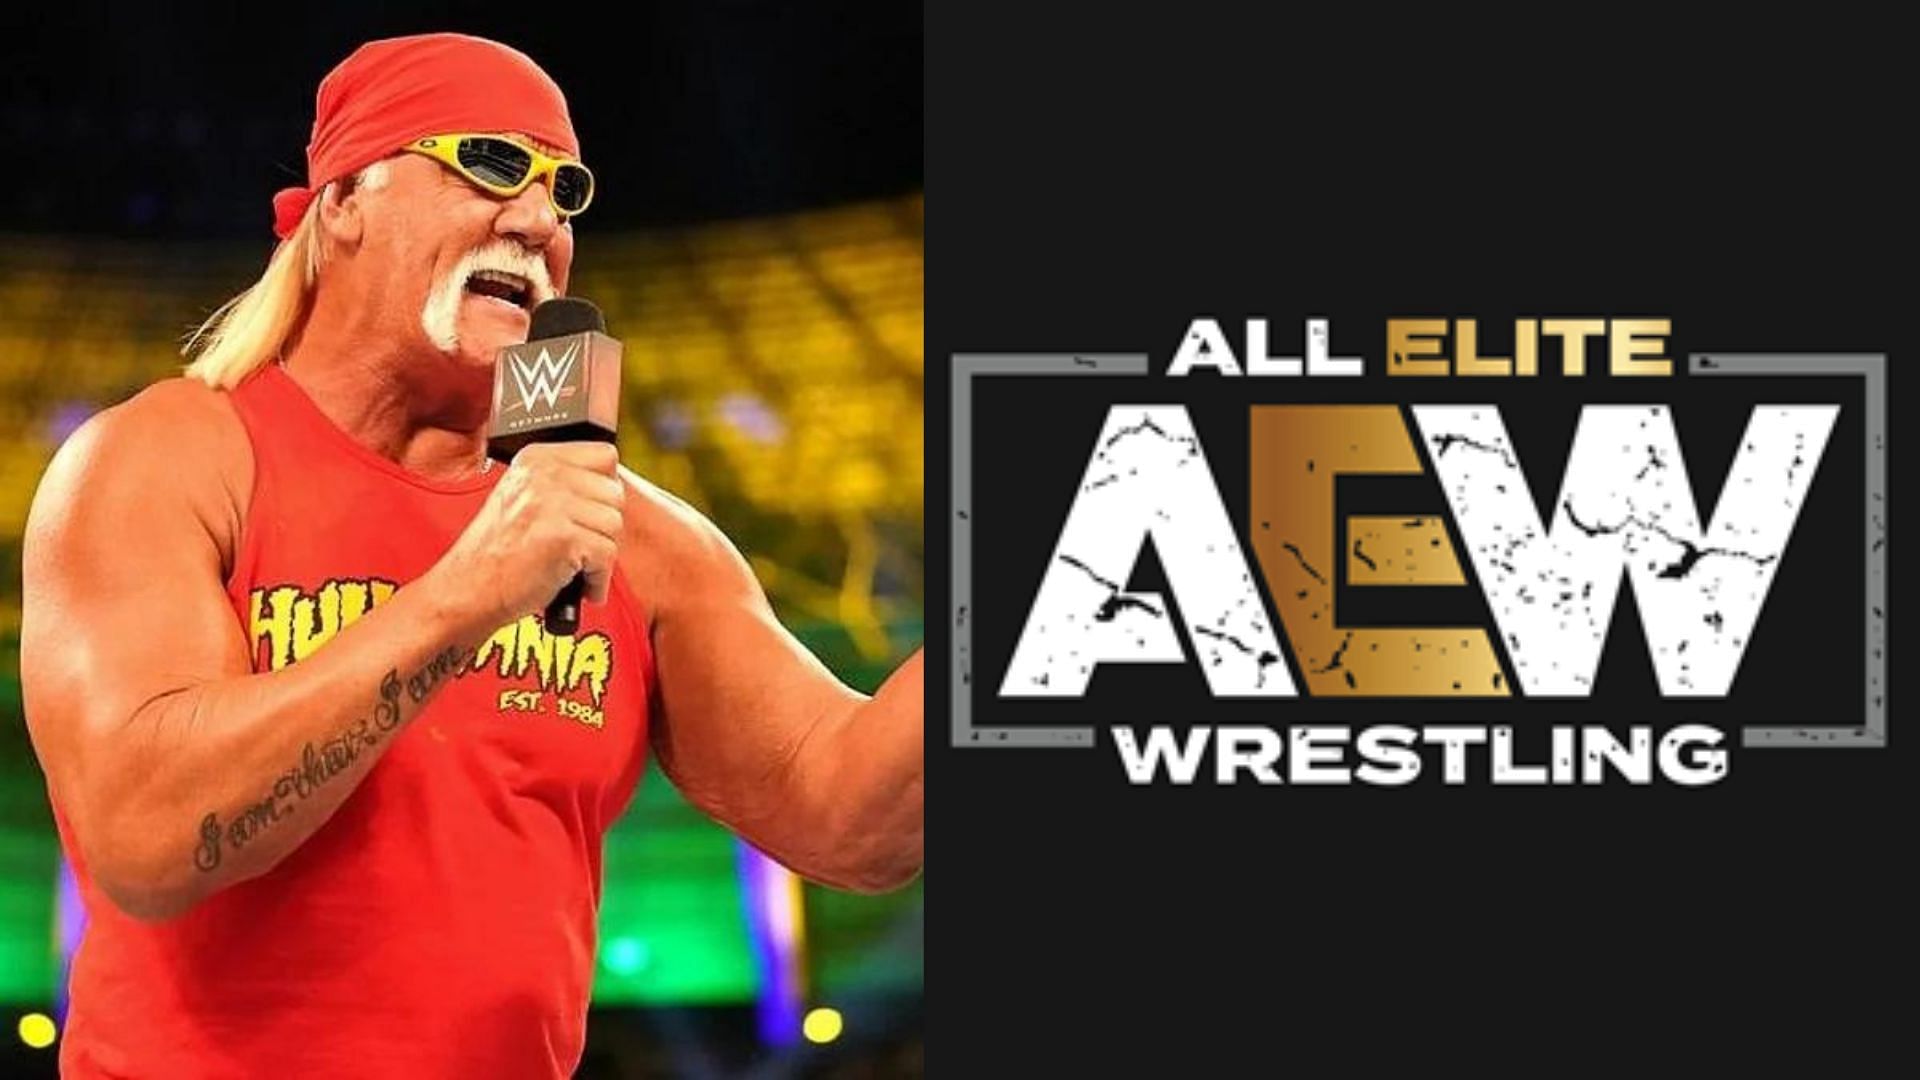 WWE Hall of Famer Hulk Hogan got engaged